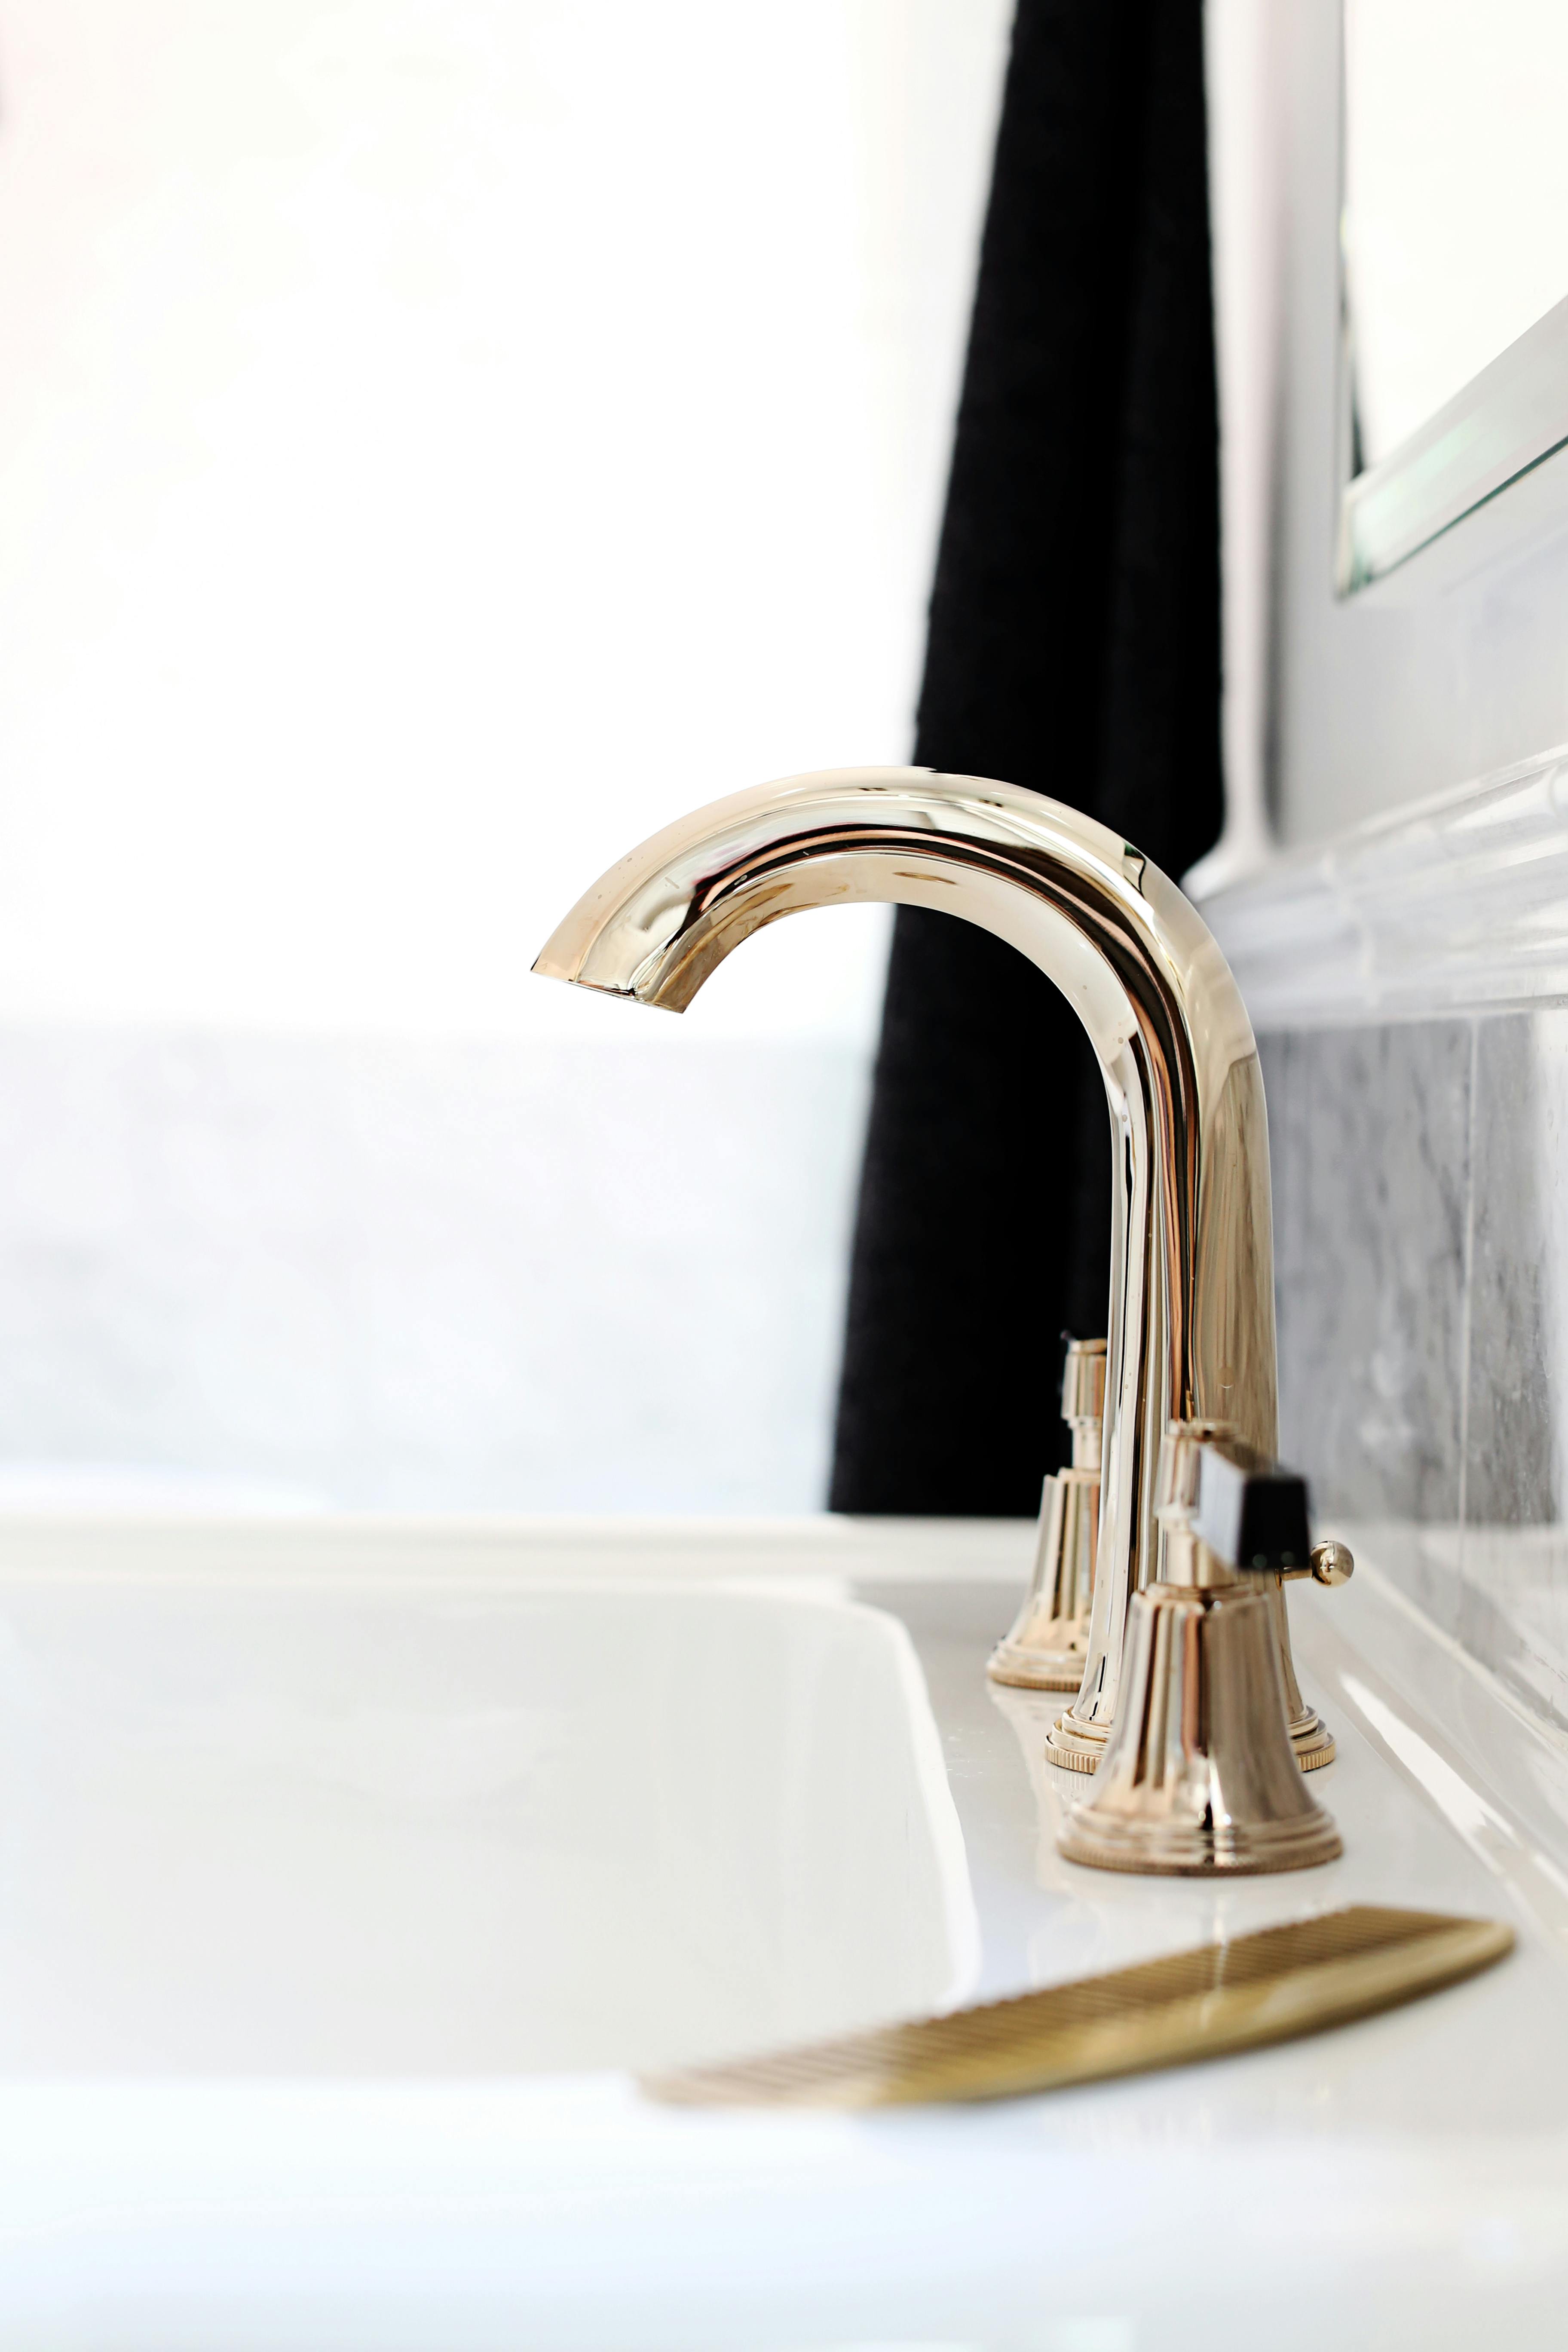 Luxury Art Deco taps mounted on a white basin